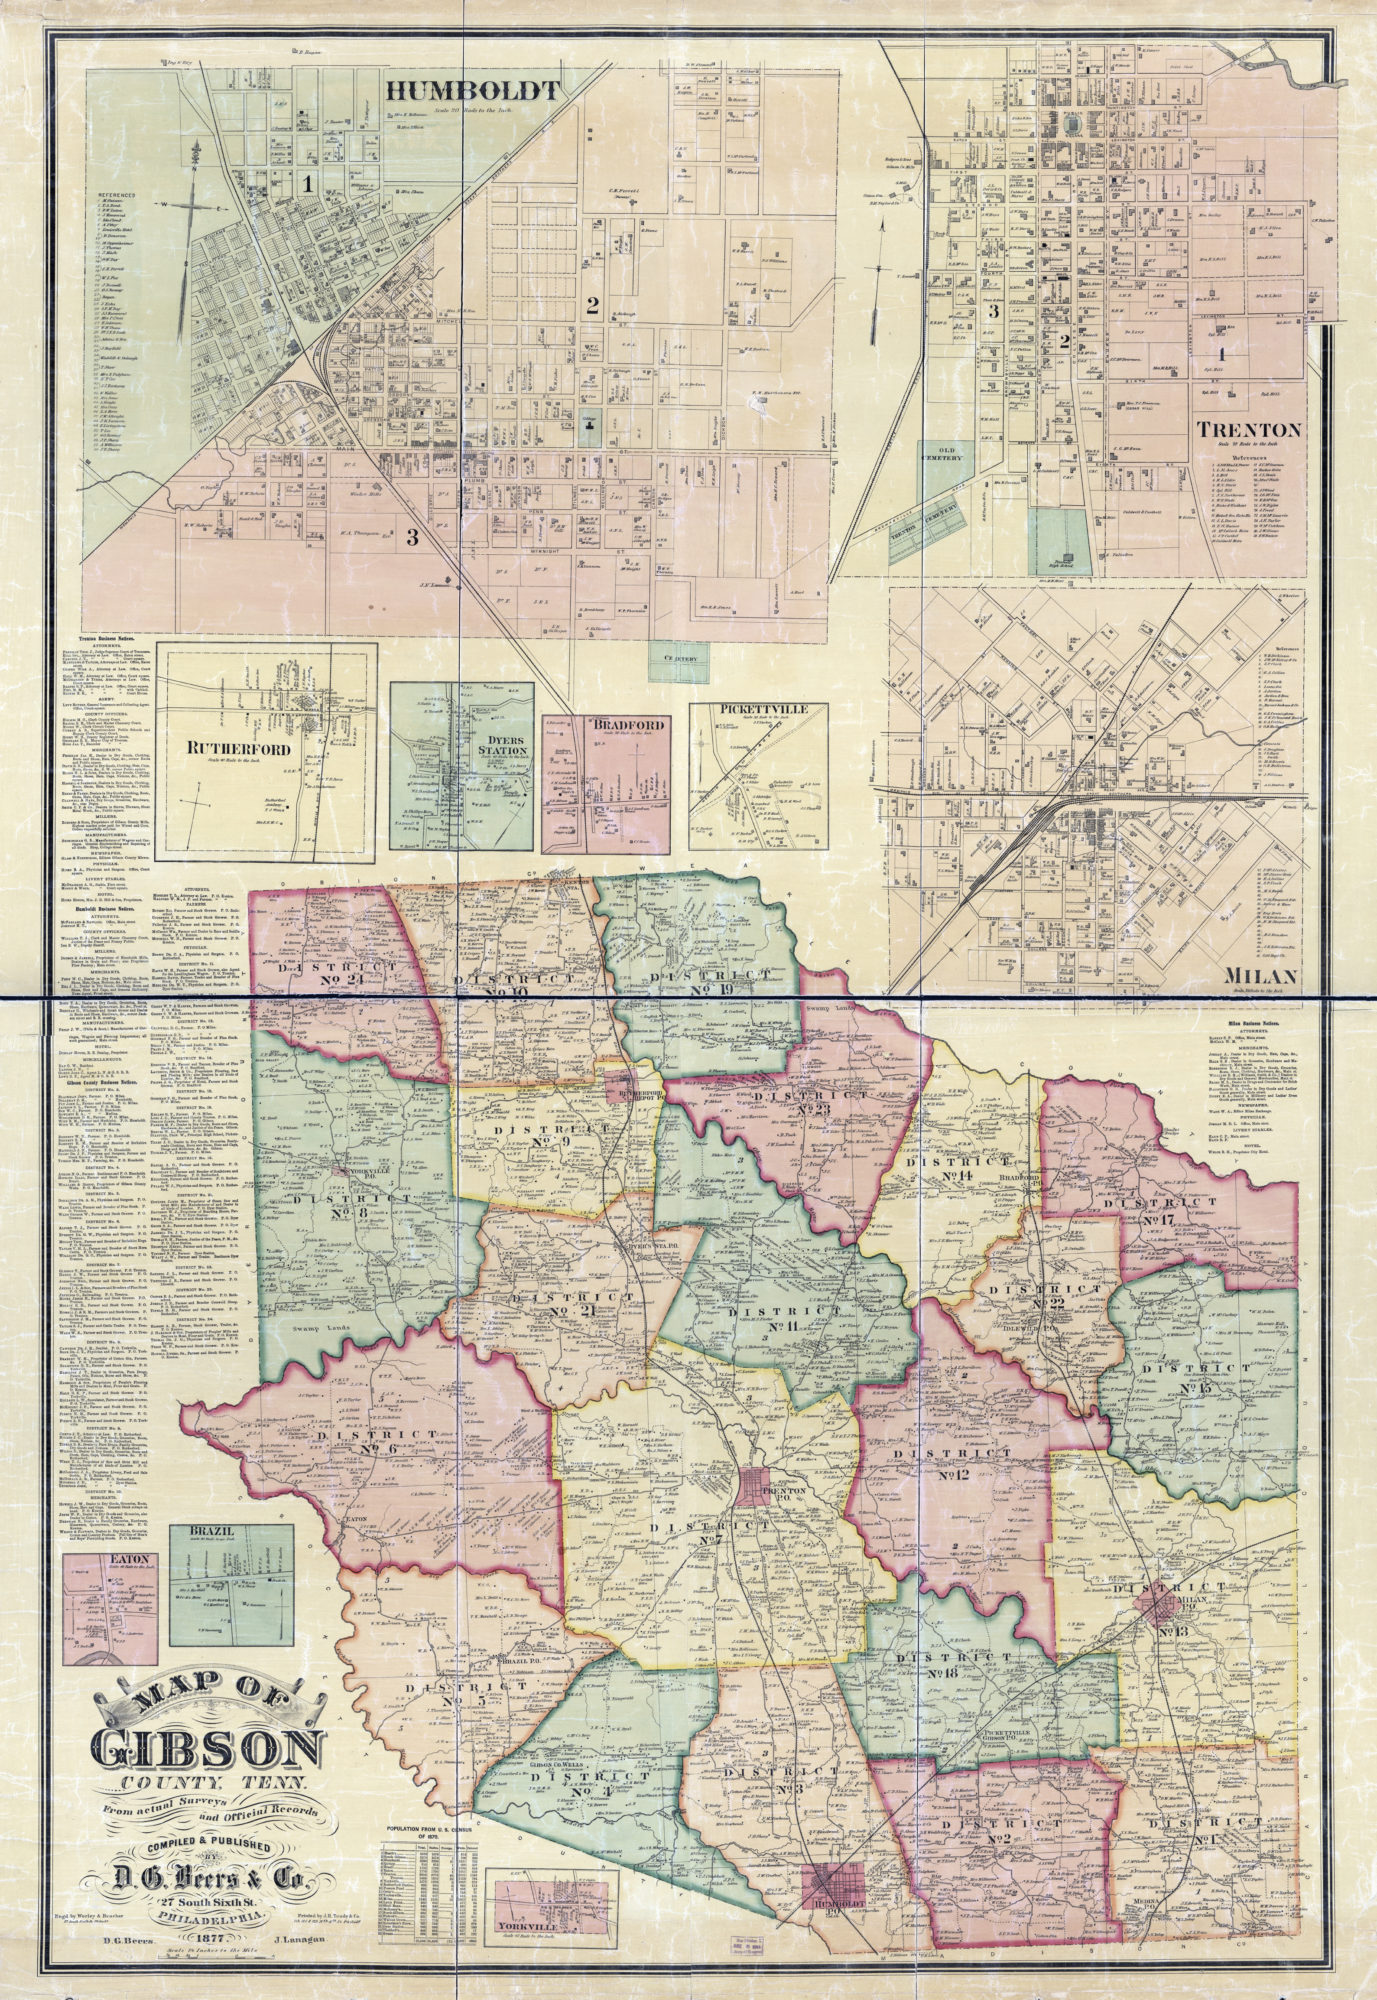 1877 Map of Gibson County, Tennessee, Philadelphia, DG Beers & Co, loc-gov